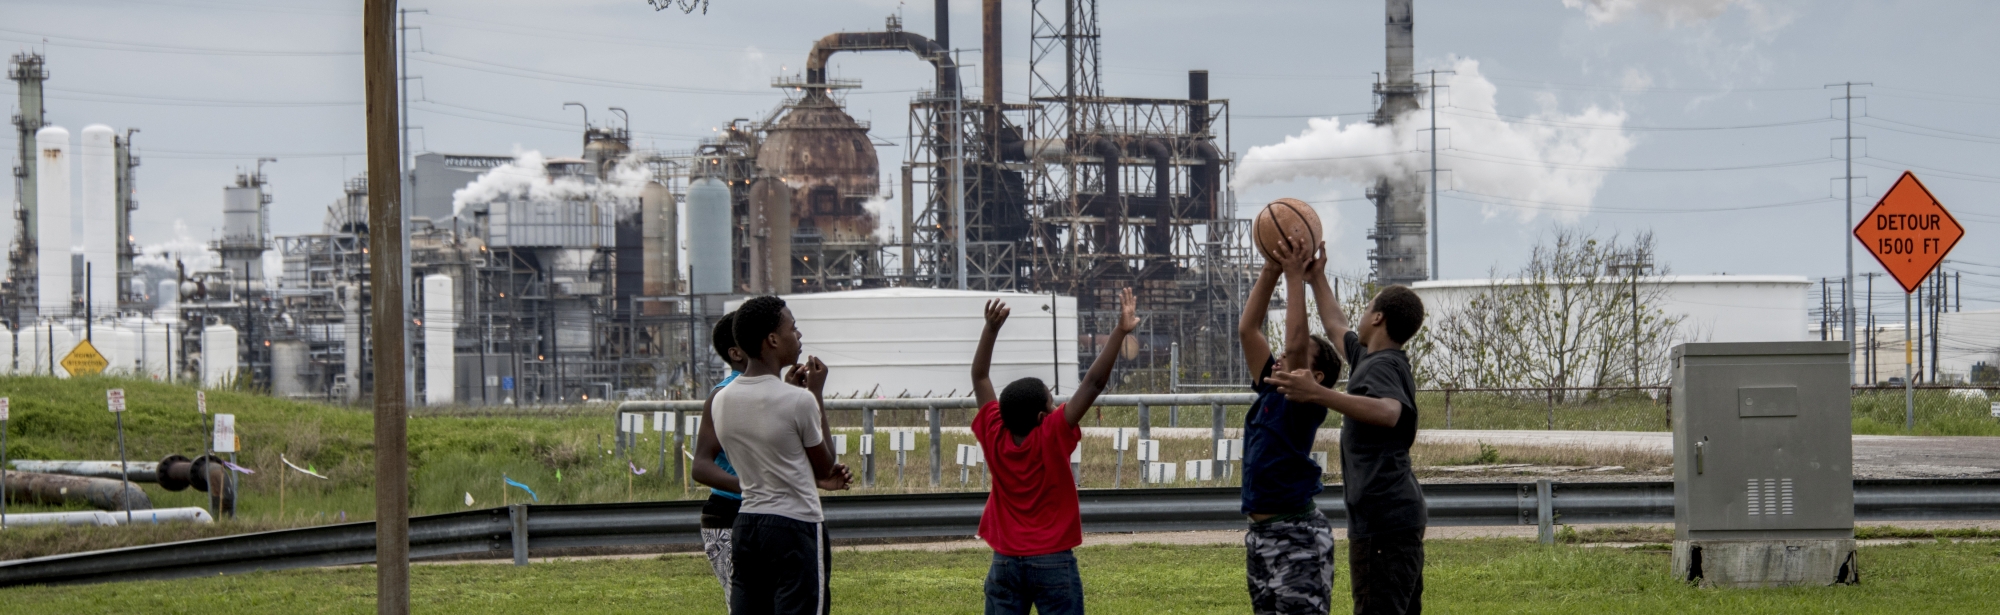 Boys playing basketball near a refinery in Port Arthur, Texas. Photo via KAREN KASMAUSKI/SCIENCE PHOTO LIBRARY